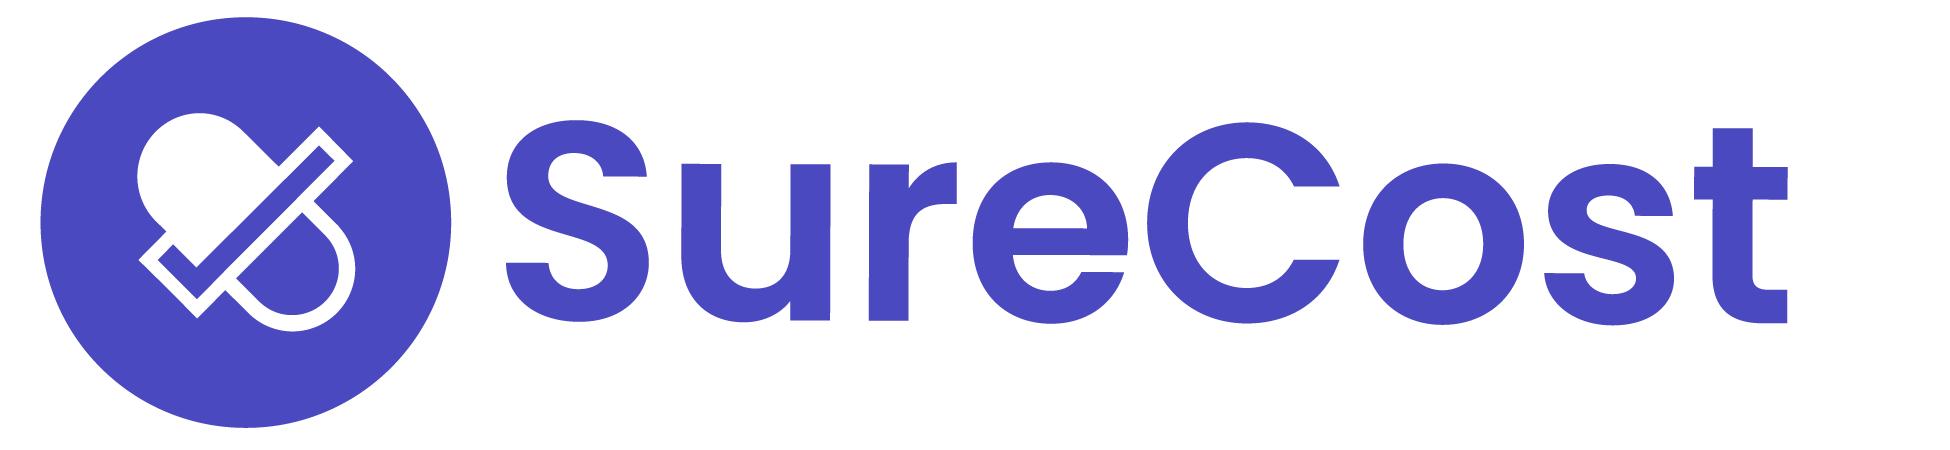 SureCost logo-purple